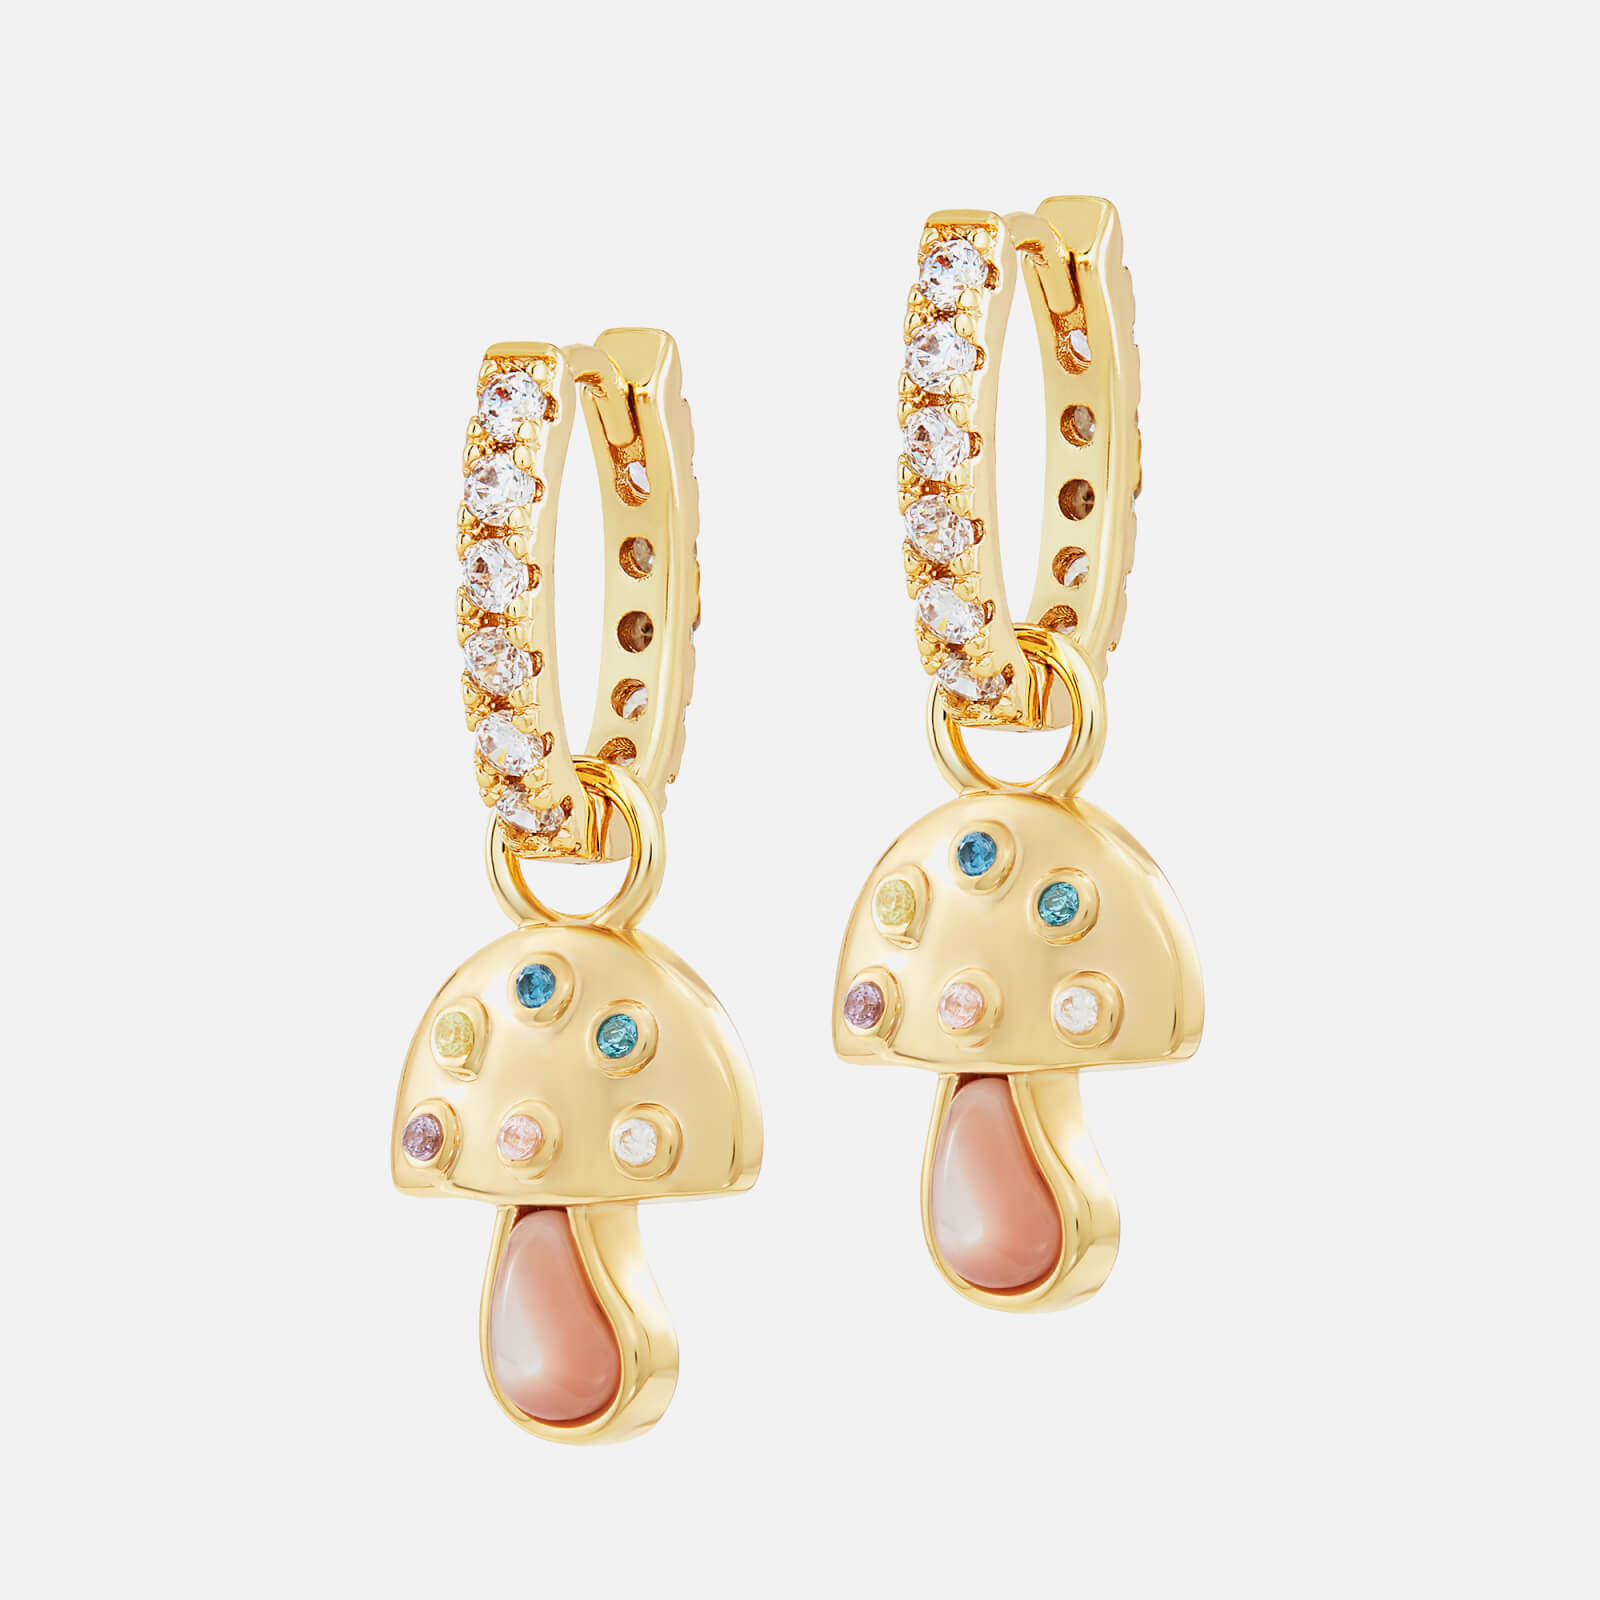 Celeste Starre Women's The Wonderland Earrings - Gold